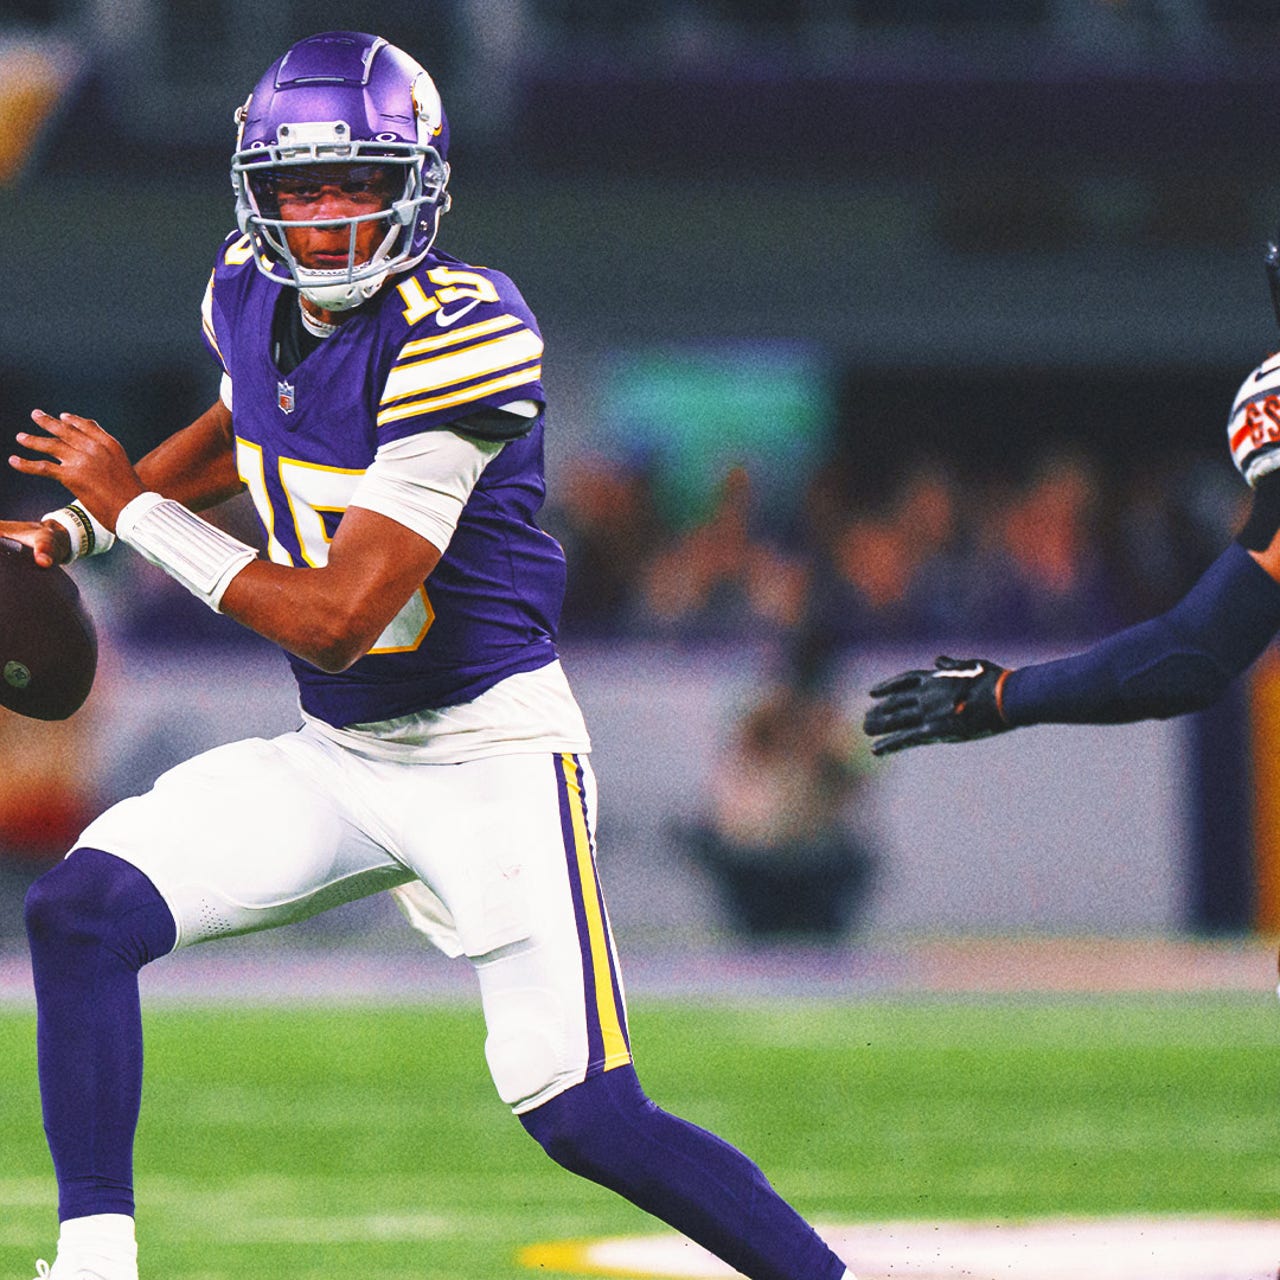 Can Joshua Dobbs LEAD the Minnesota Vikings to the PLAYOFFS?, NFL on FOX  Pod